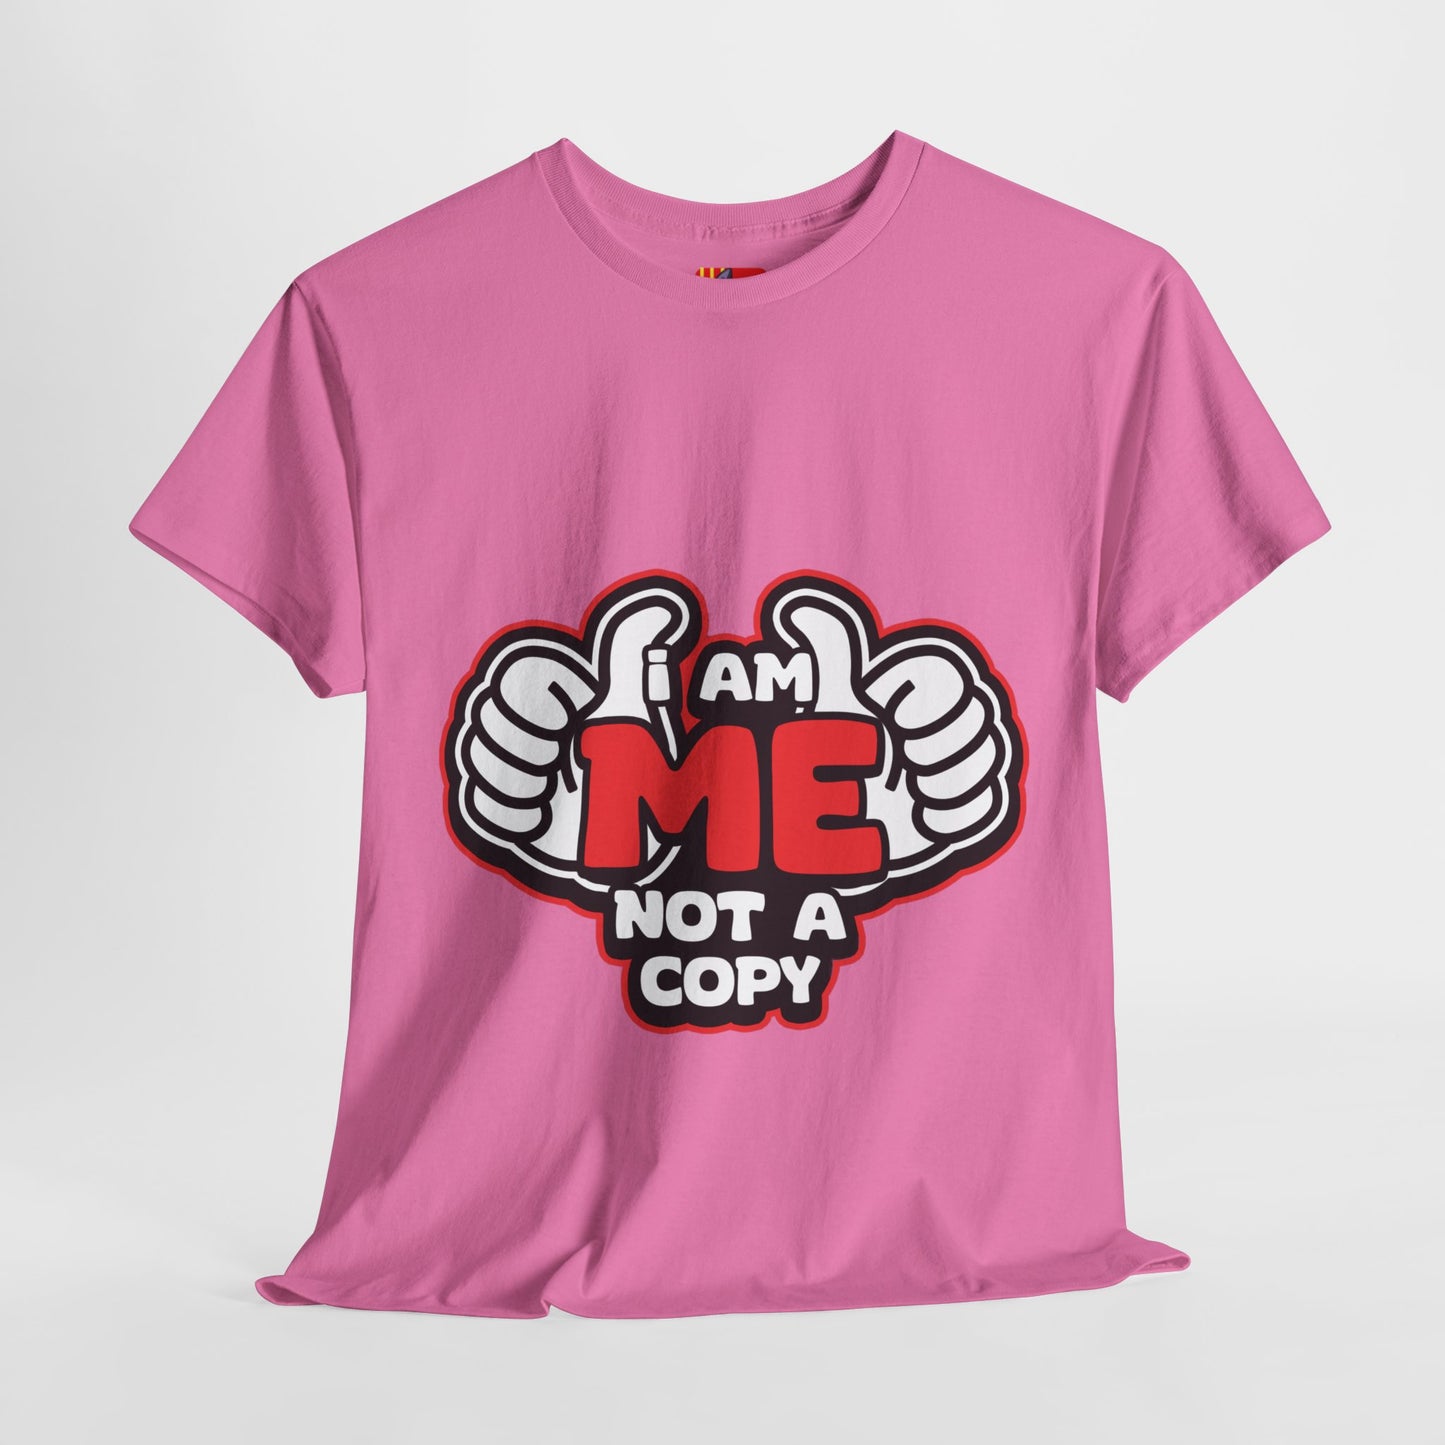 The Resilient Soul T-Shirt: I am me not a copy